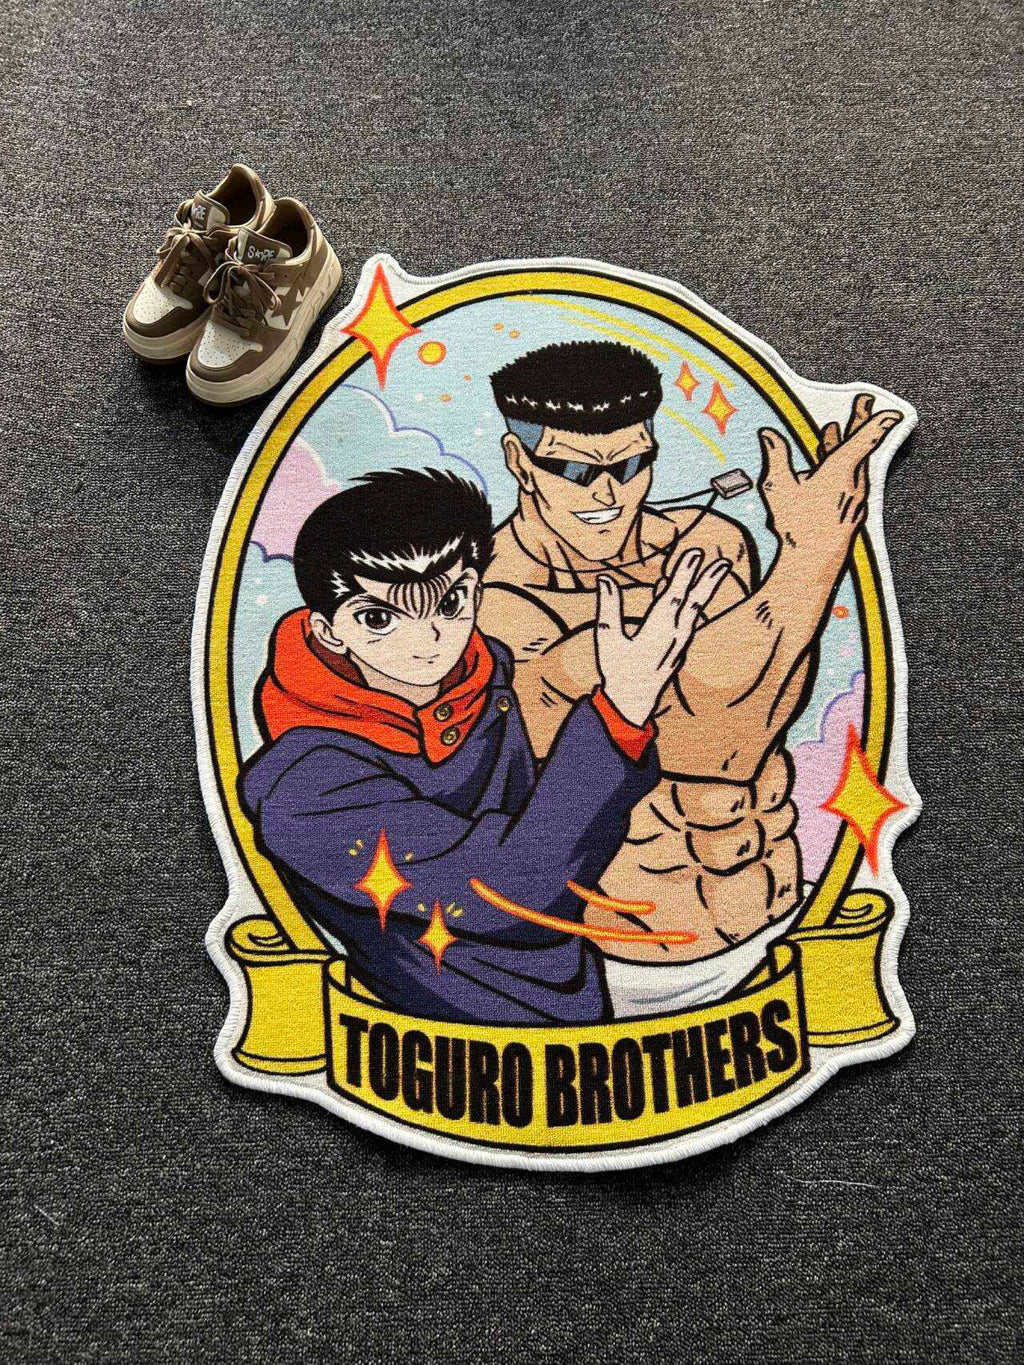 Toguro Brothers Rug